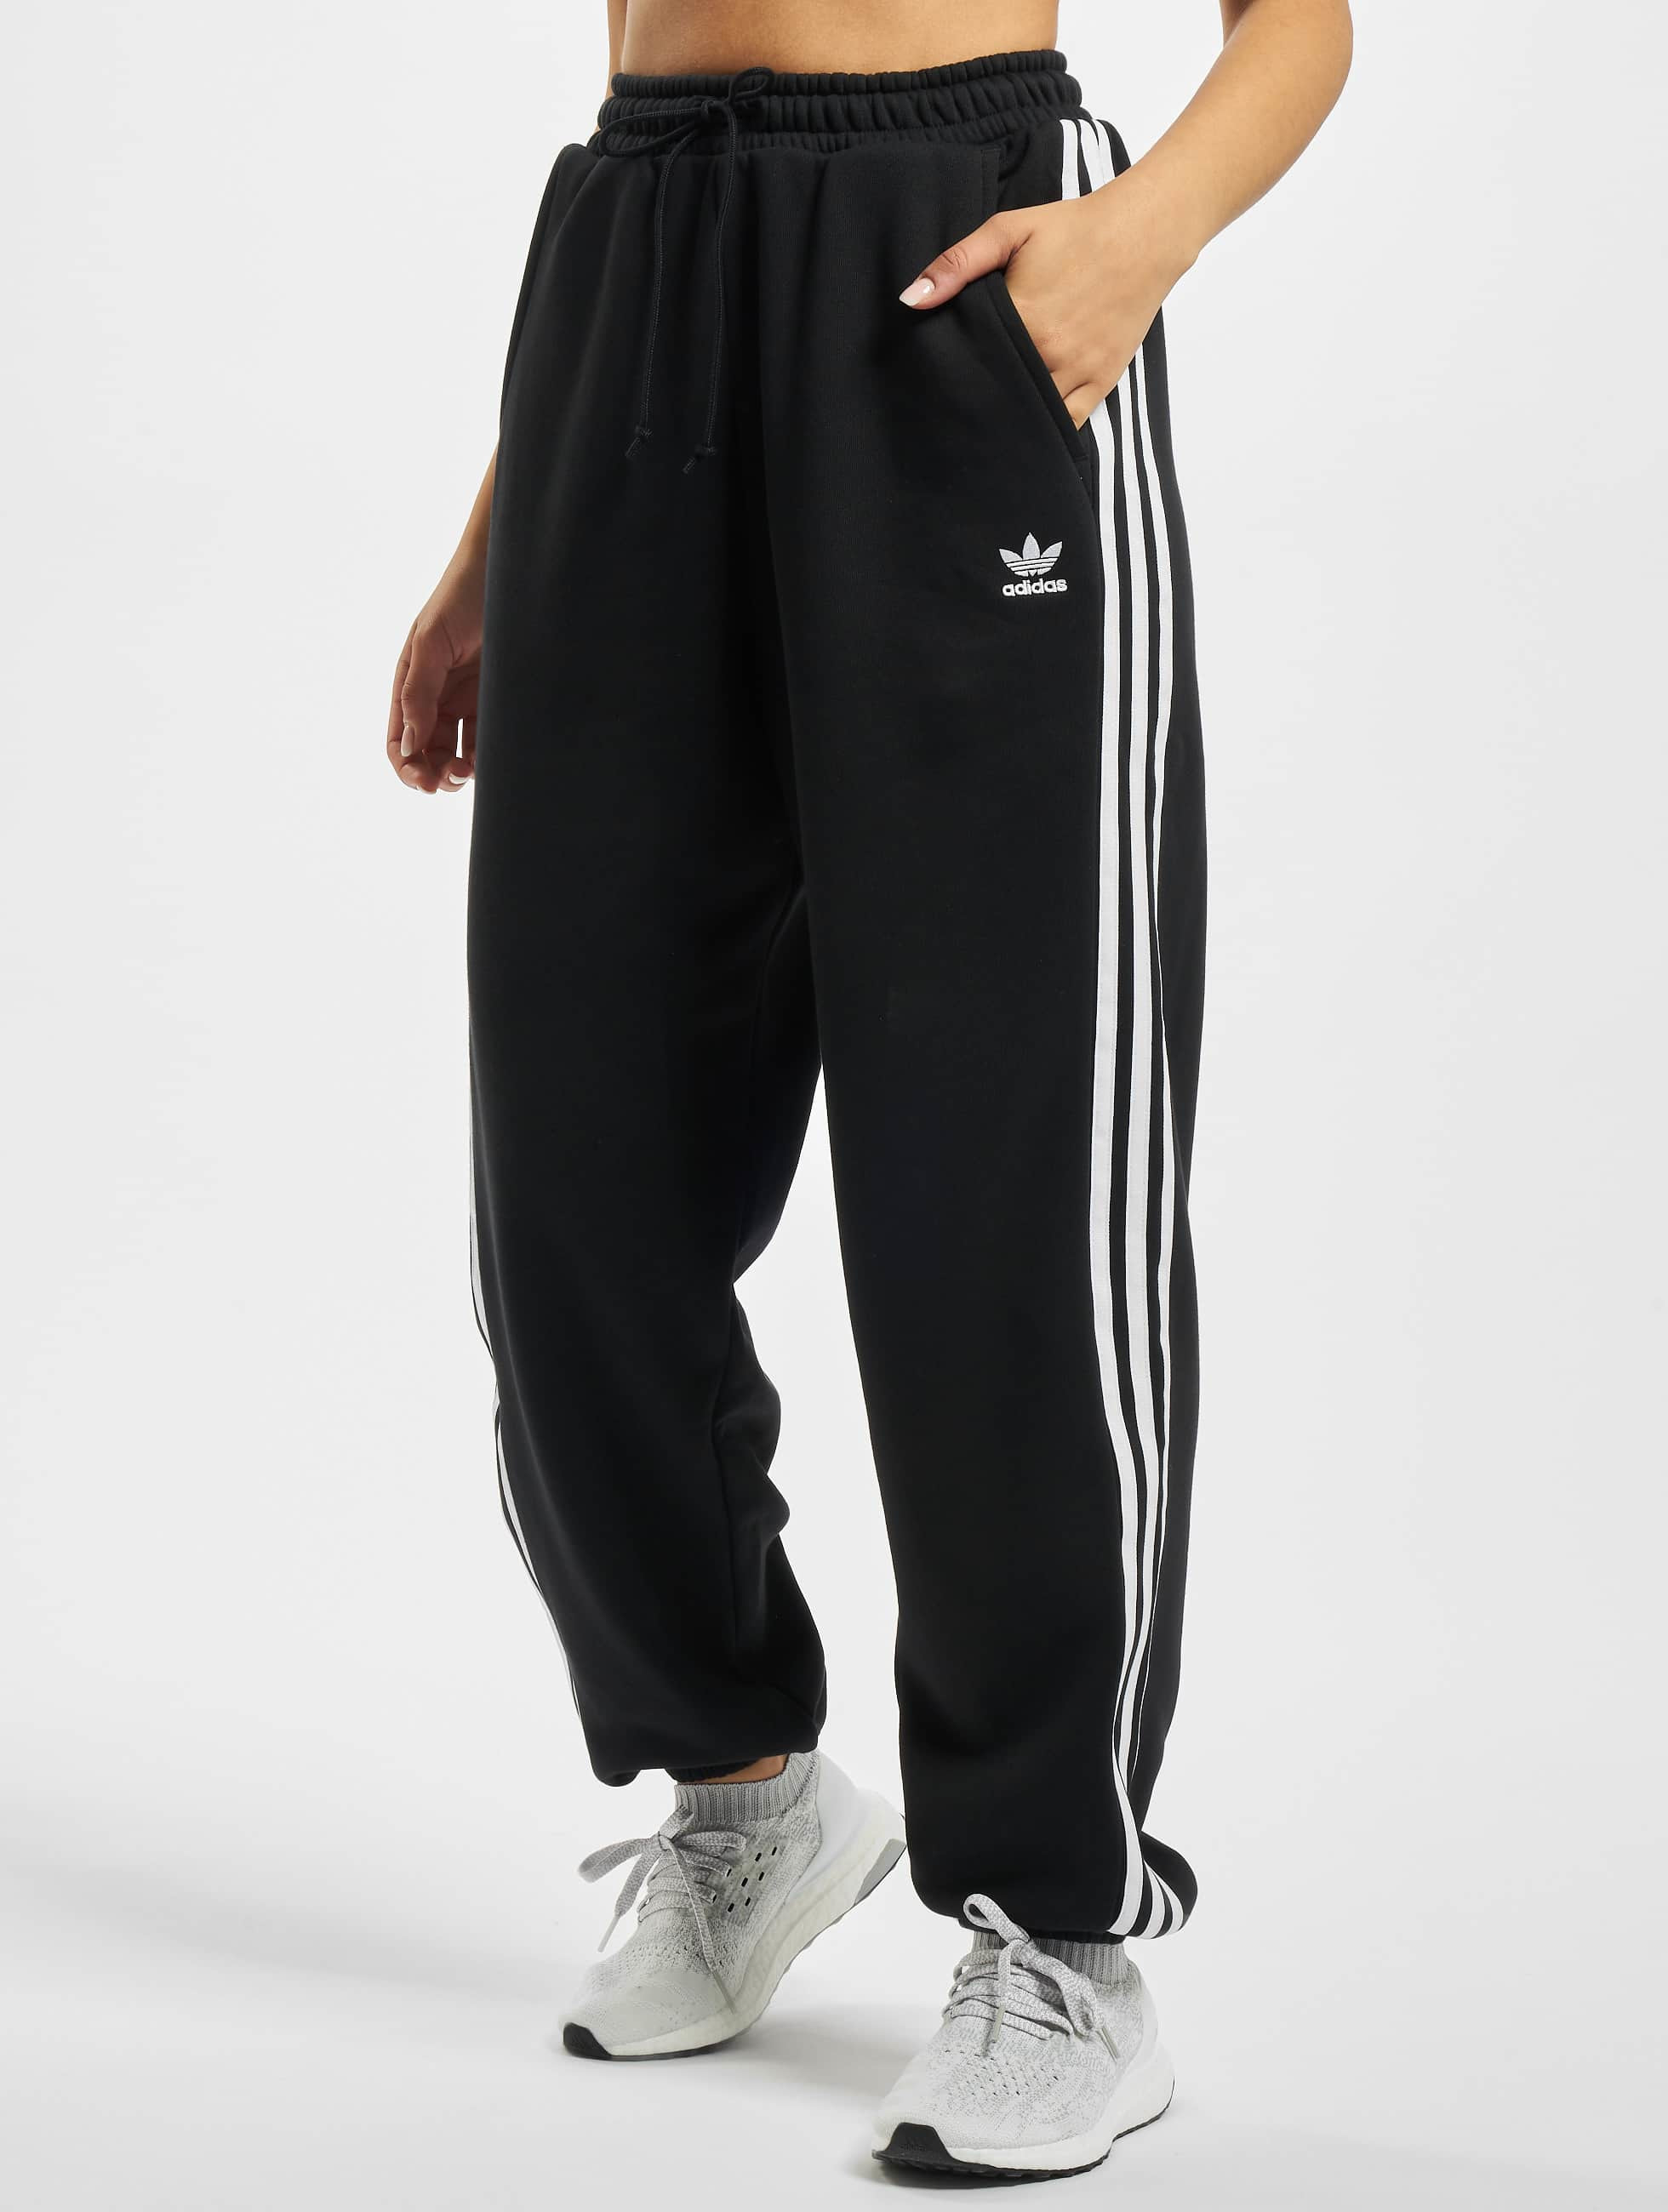 Adidas Originals 3-Stripes Sweat Pants Black